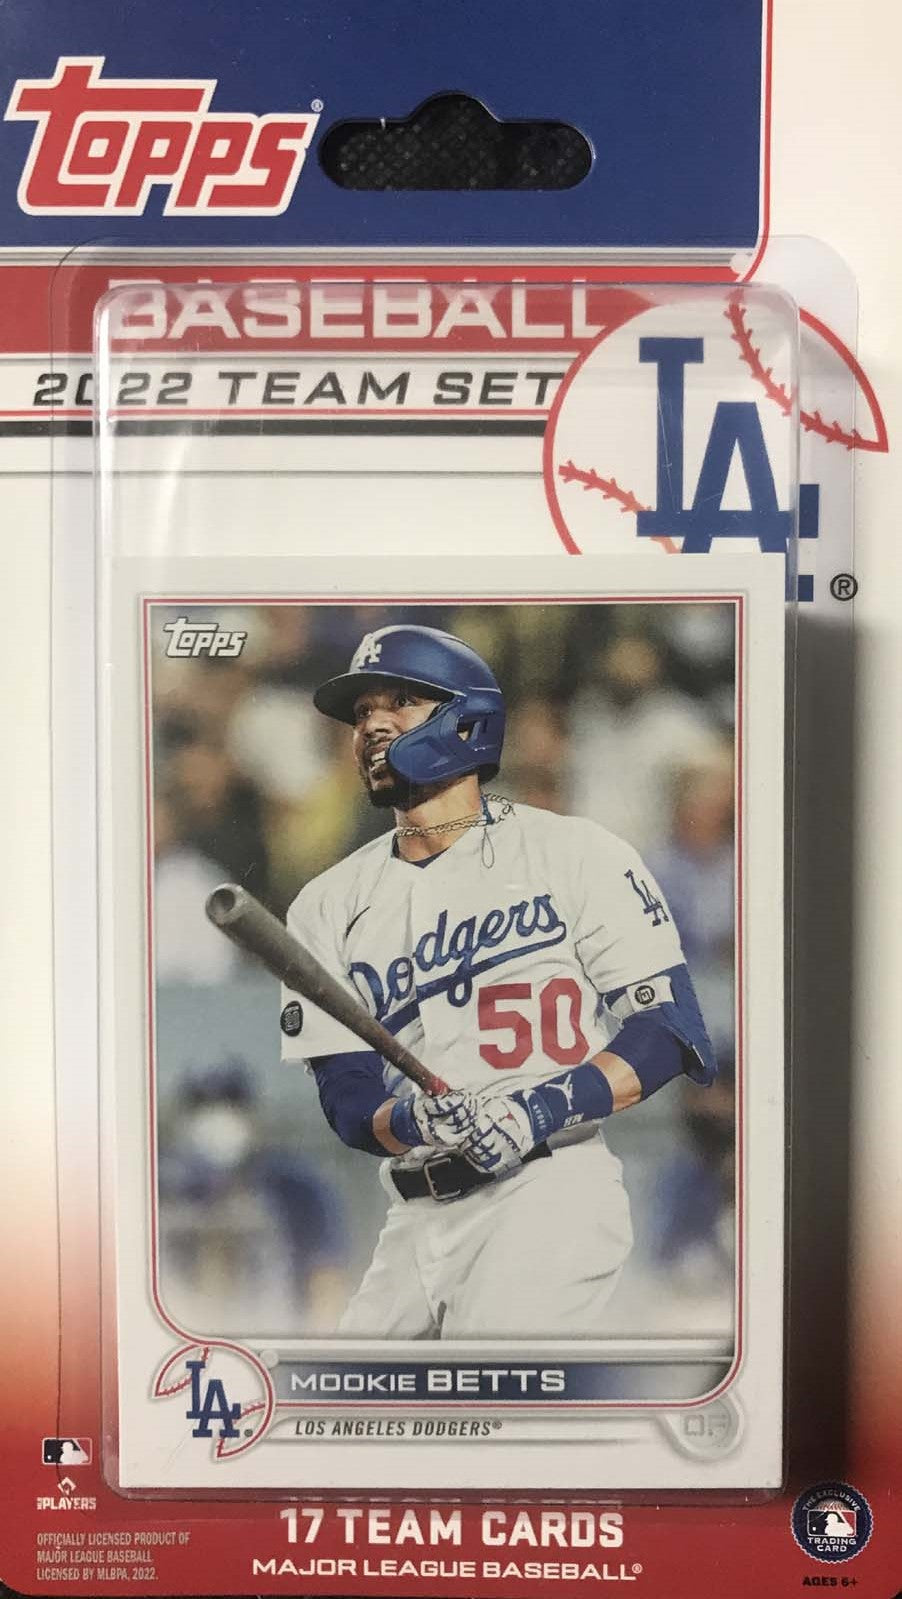 Austin Barnes 2022 Topps Series 2 Baseball Card #420 Los Angeles Dodgers